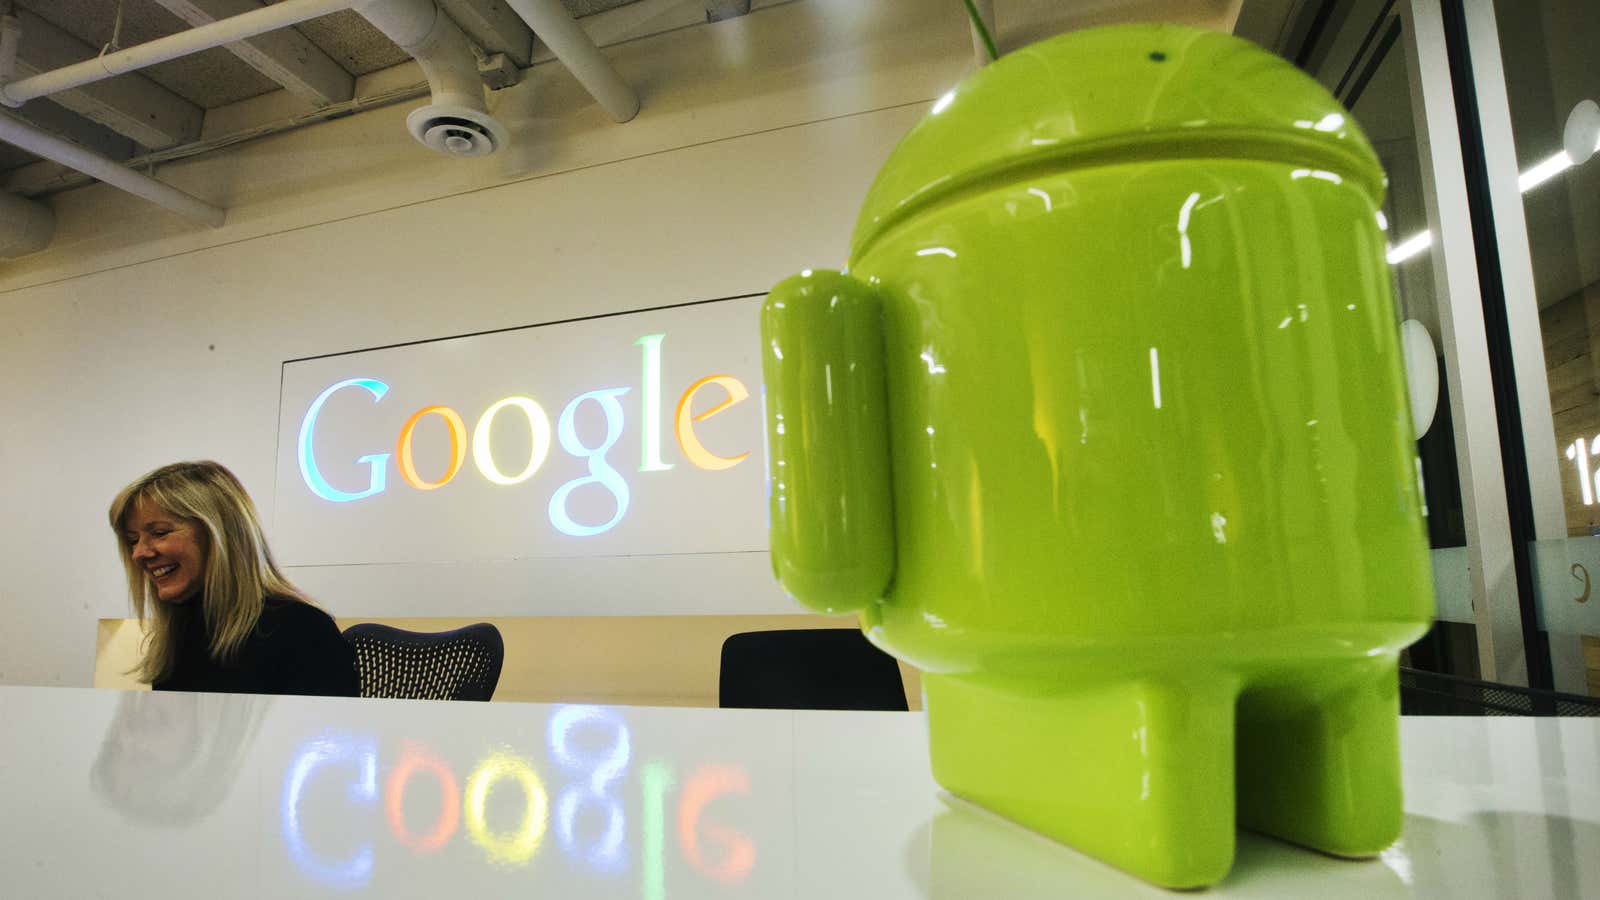 Google’s Android figurine.